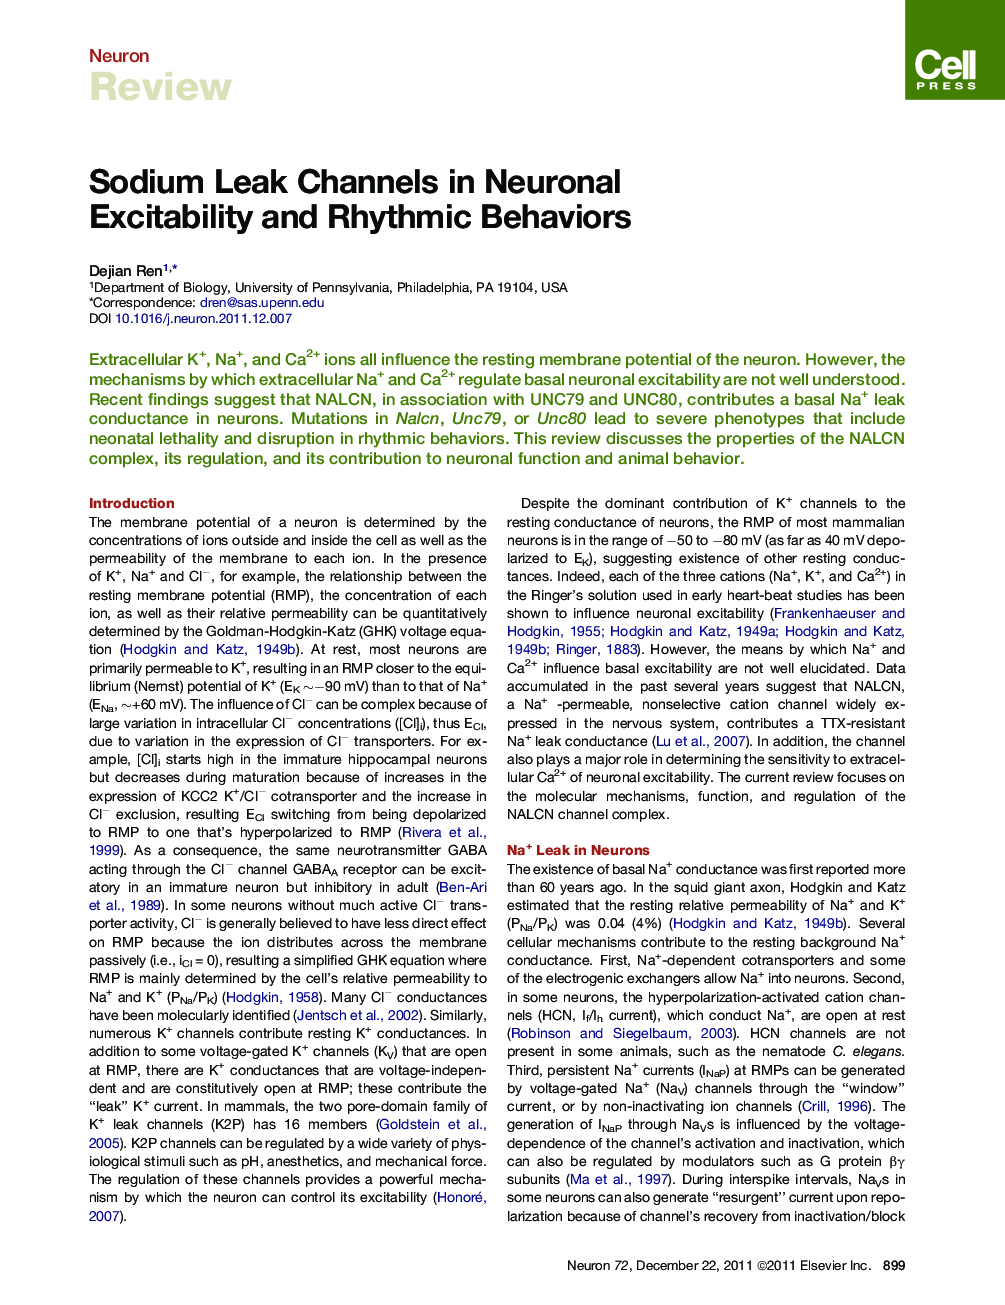 Sodium Leak Channels in Neuronal Excitability and Rhythmic Behaviors